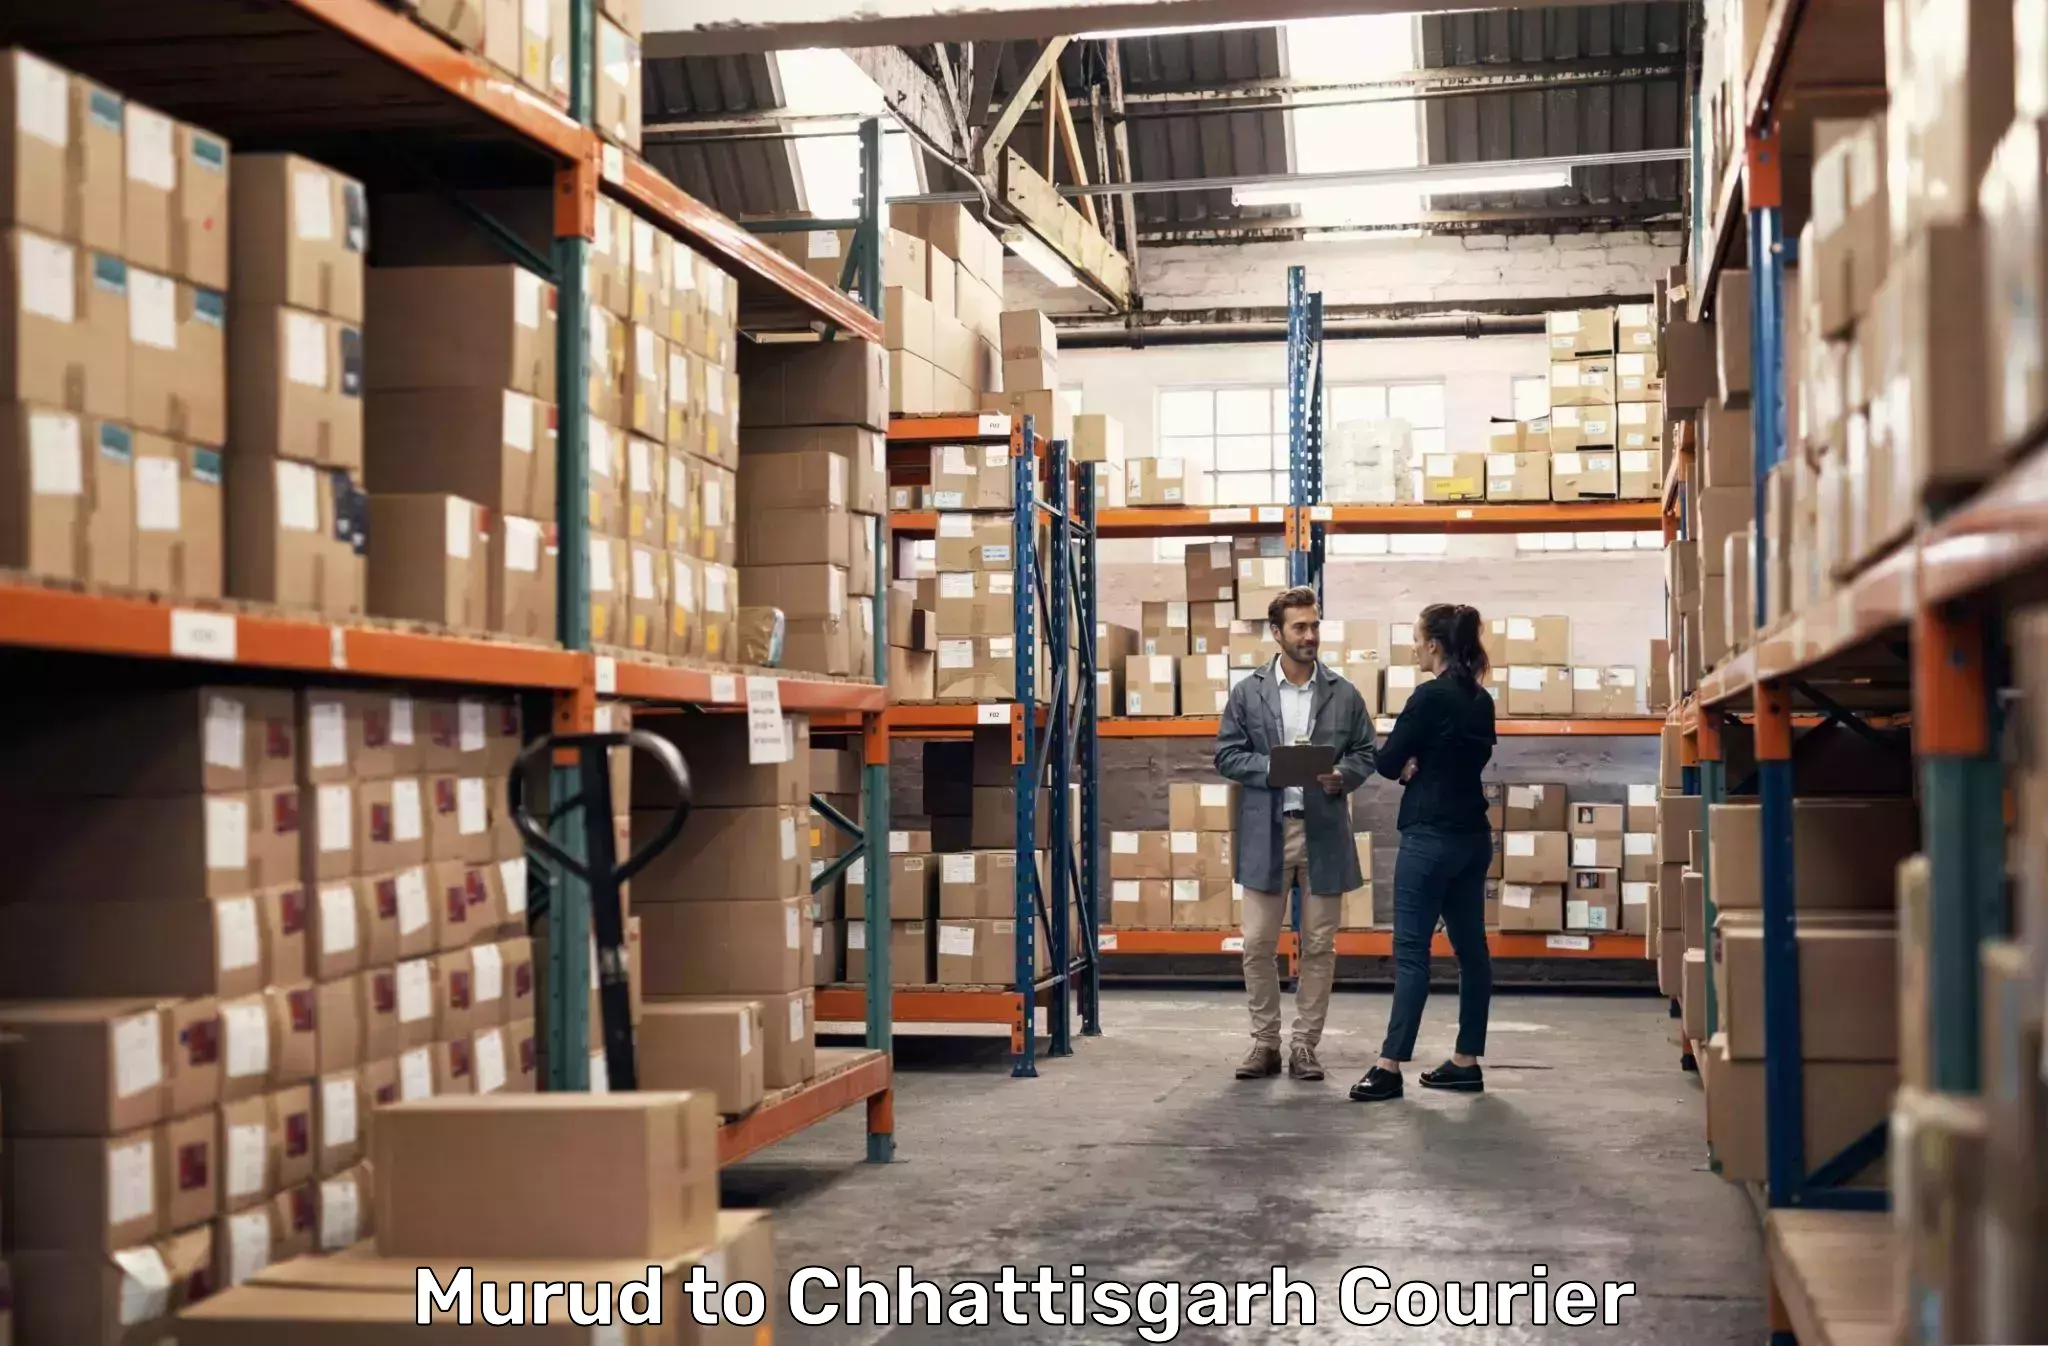 Customer-focused courier Murud to Bilaspur